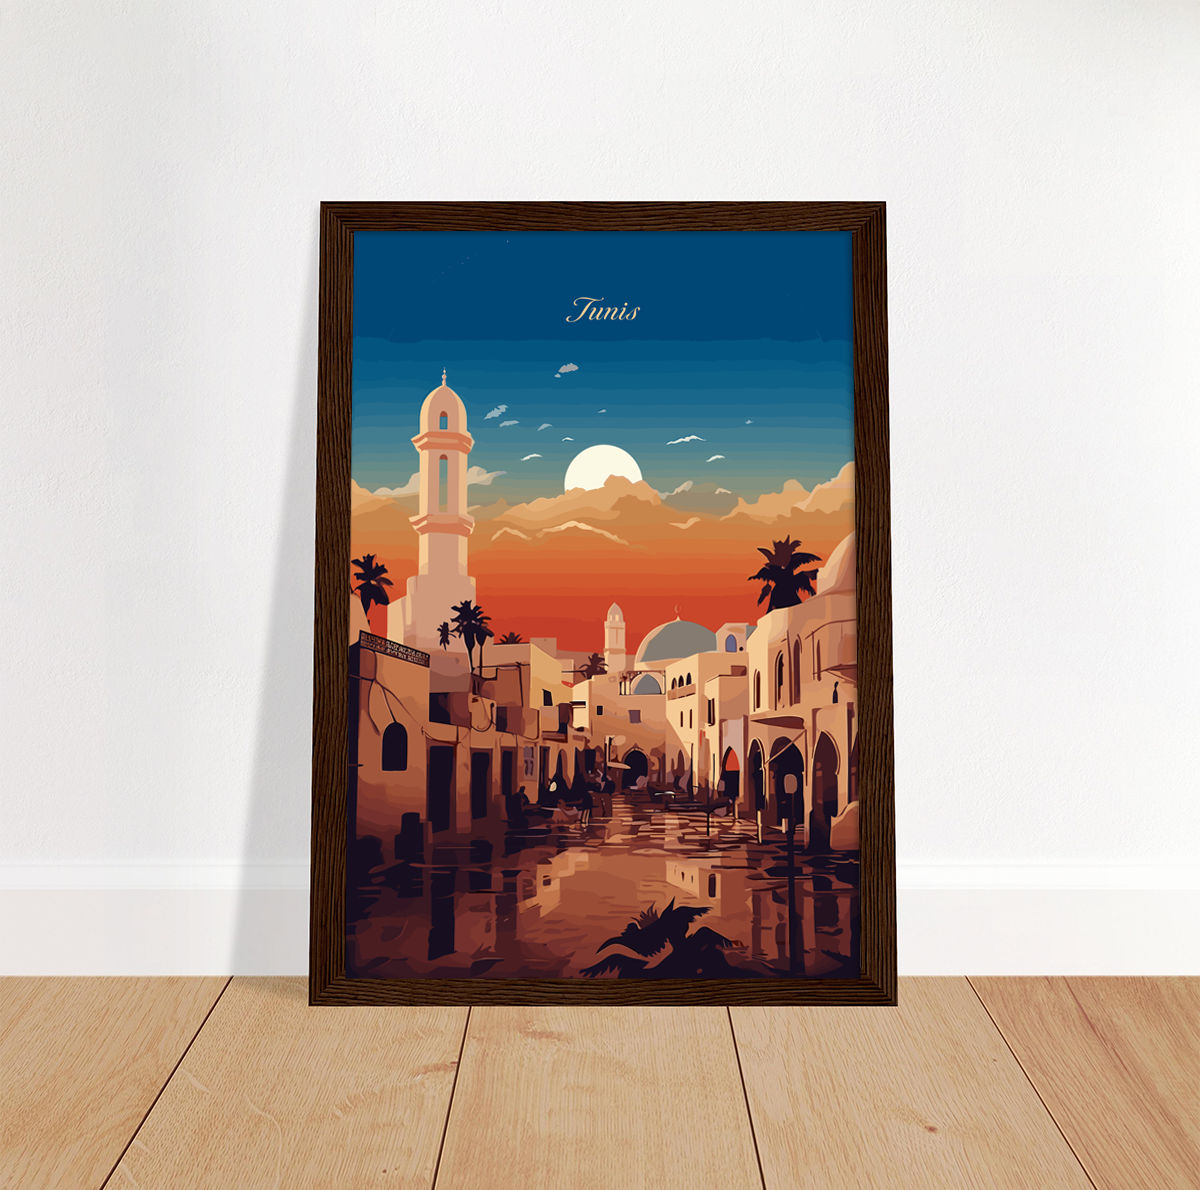 Tunis poster by bon voyage design